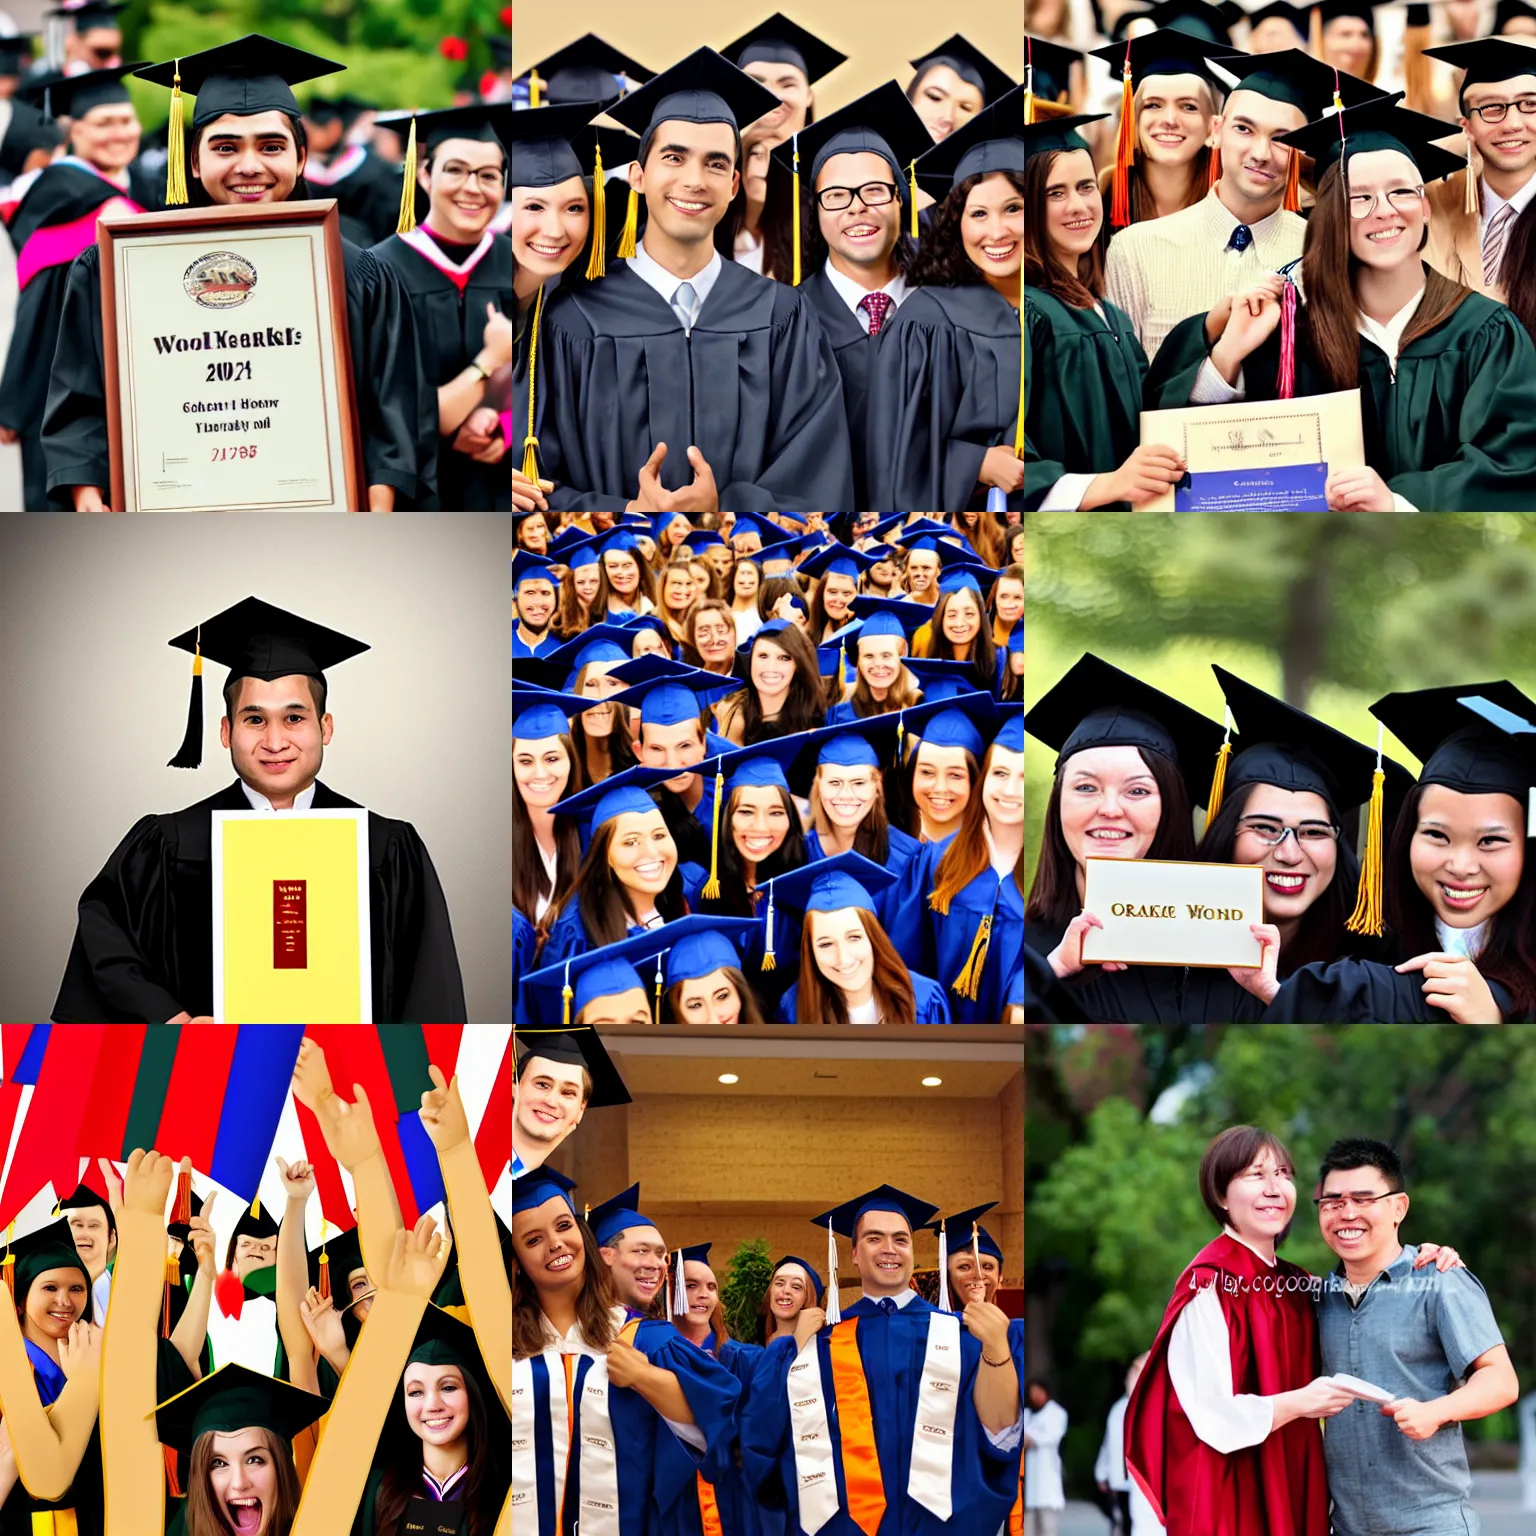 Prompt: wojak graduates from college, photohraphy, sentimental, achievement, golden years